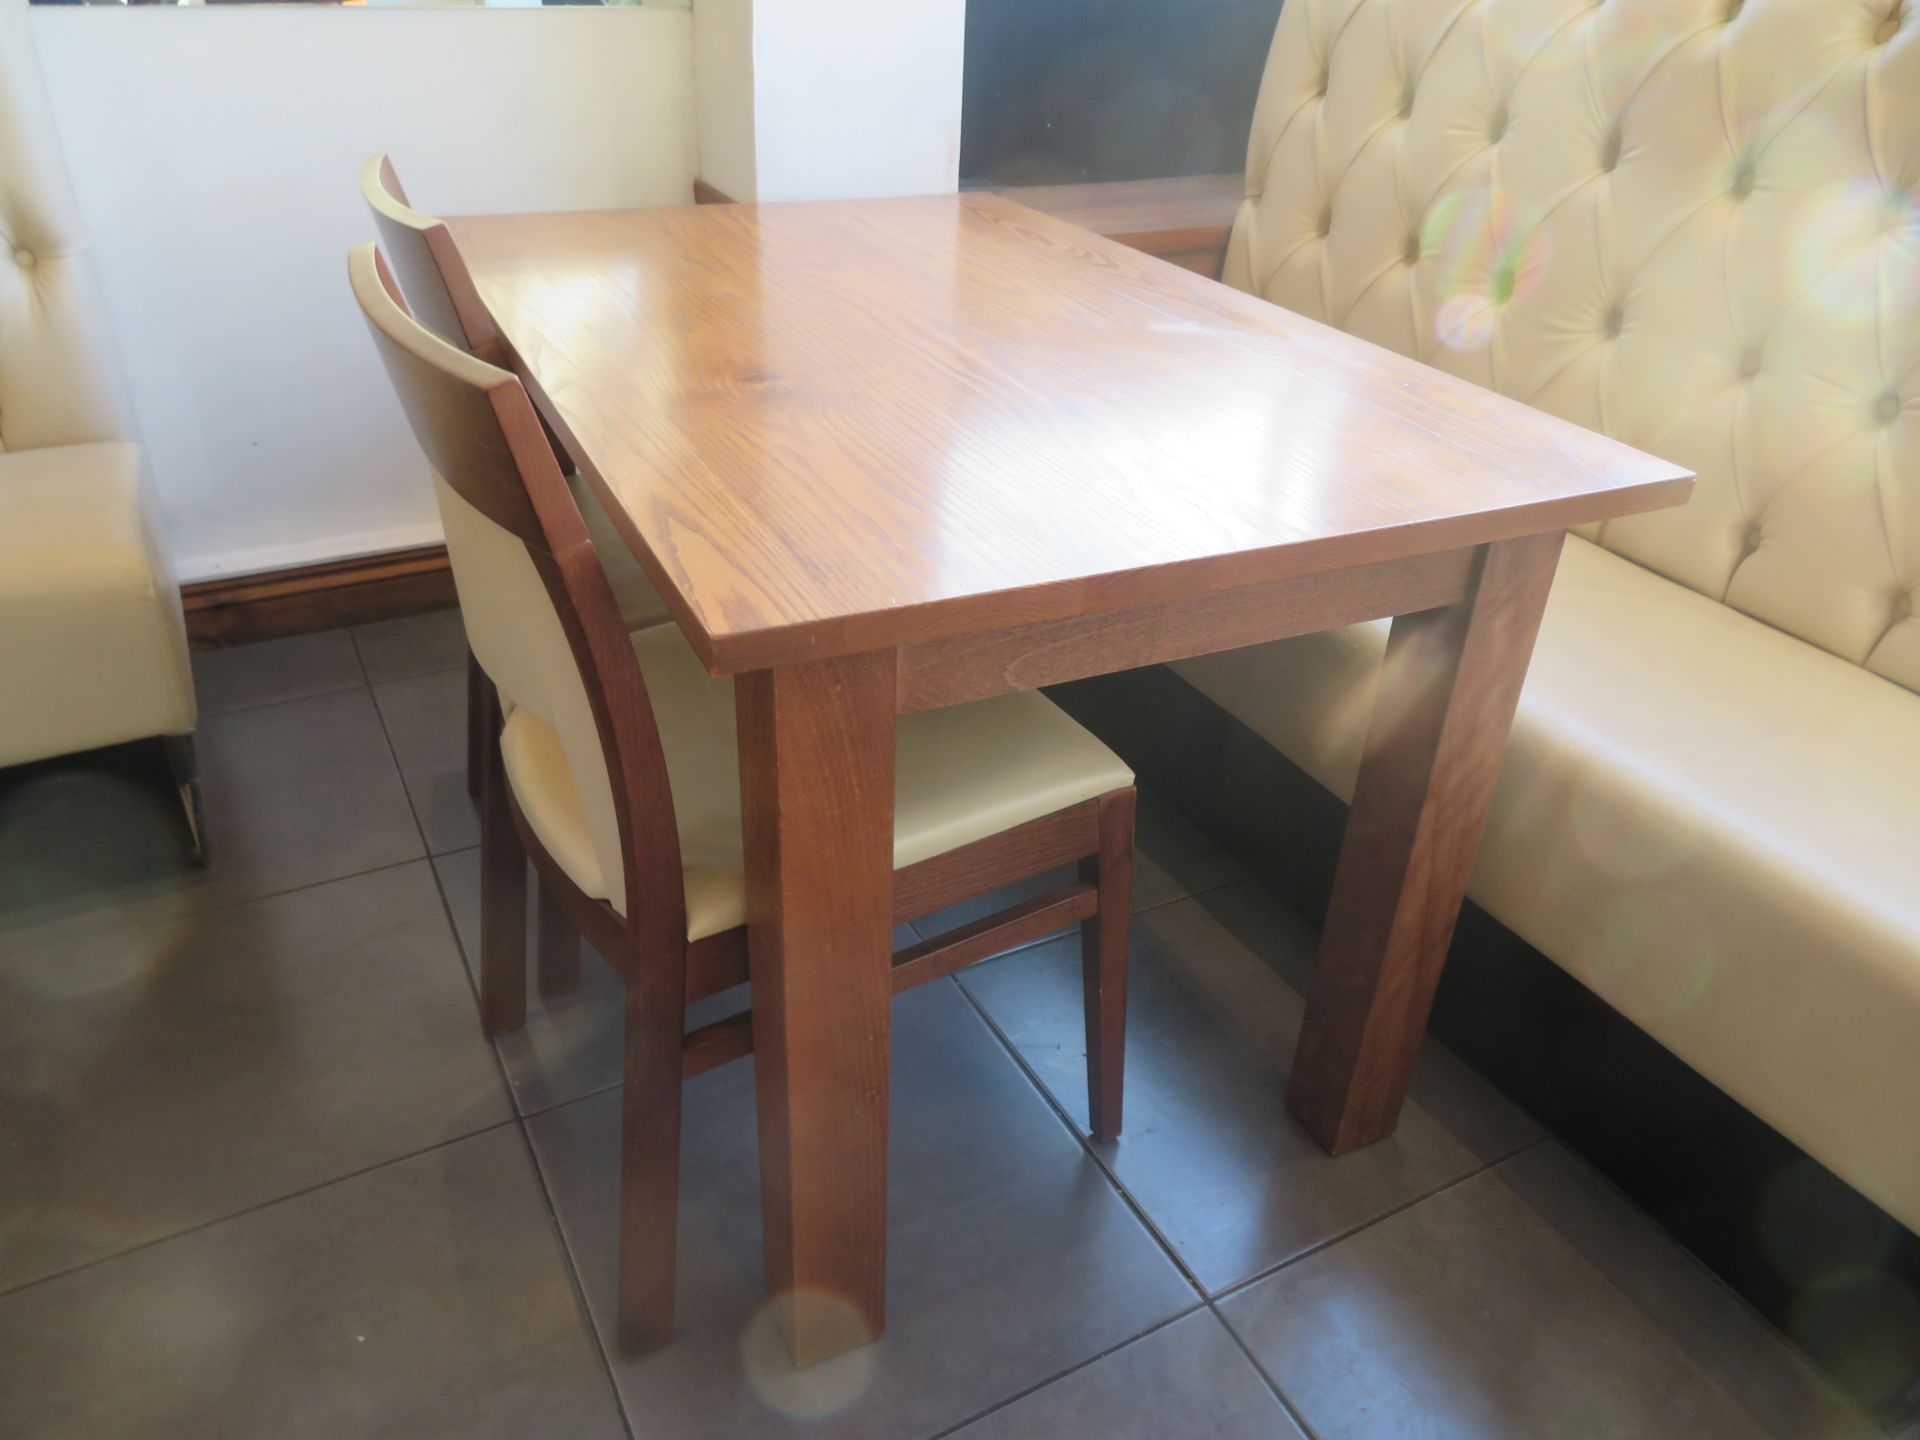 2 x Rectangluar Dining Tables (1800 x 760 & 1200 x 760mm) - Image 2 of 2